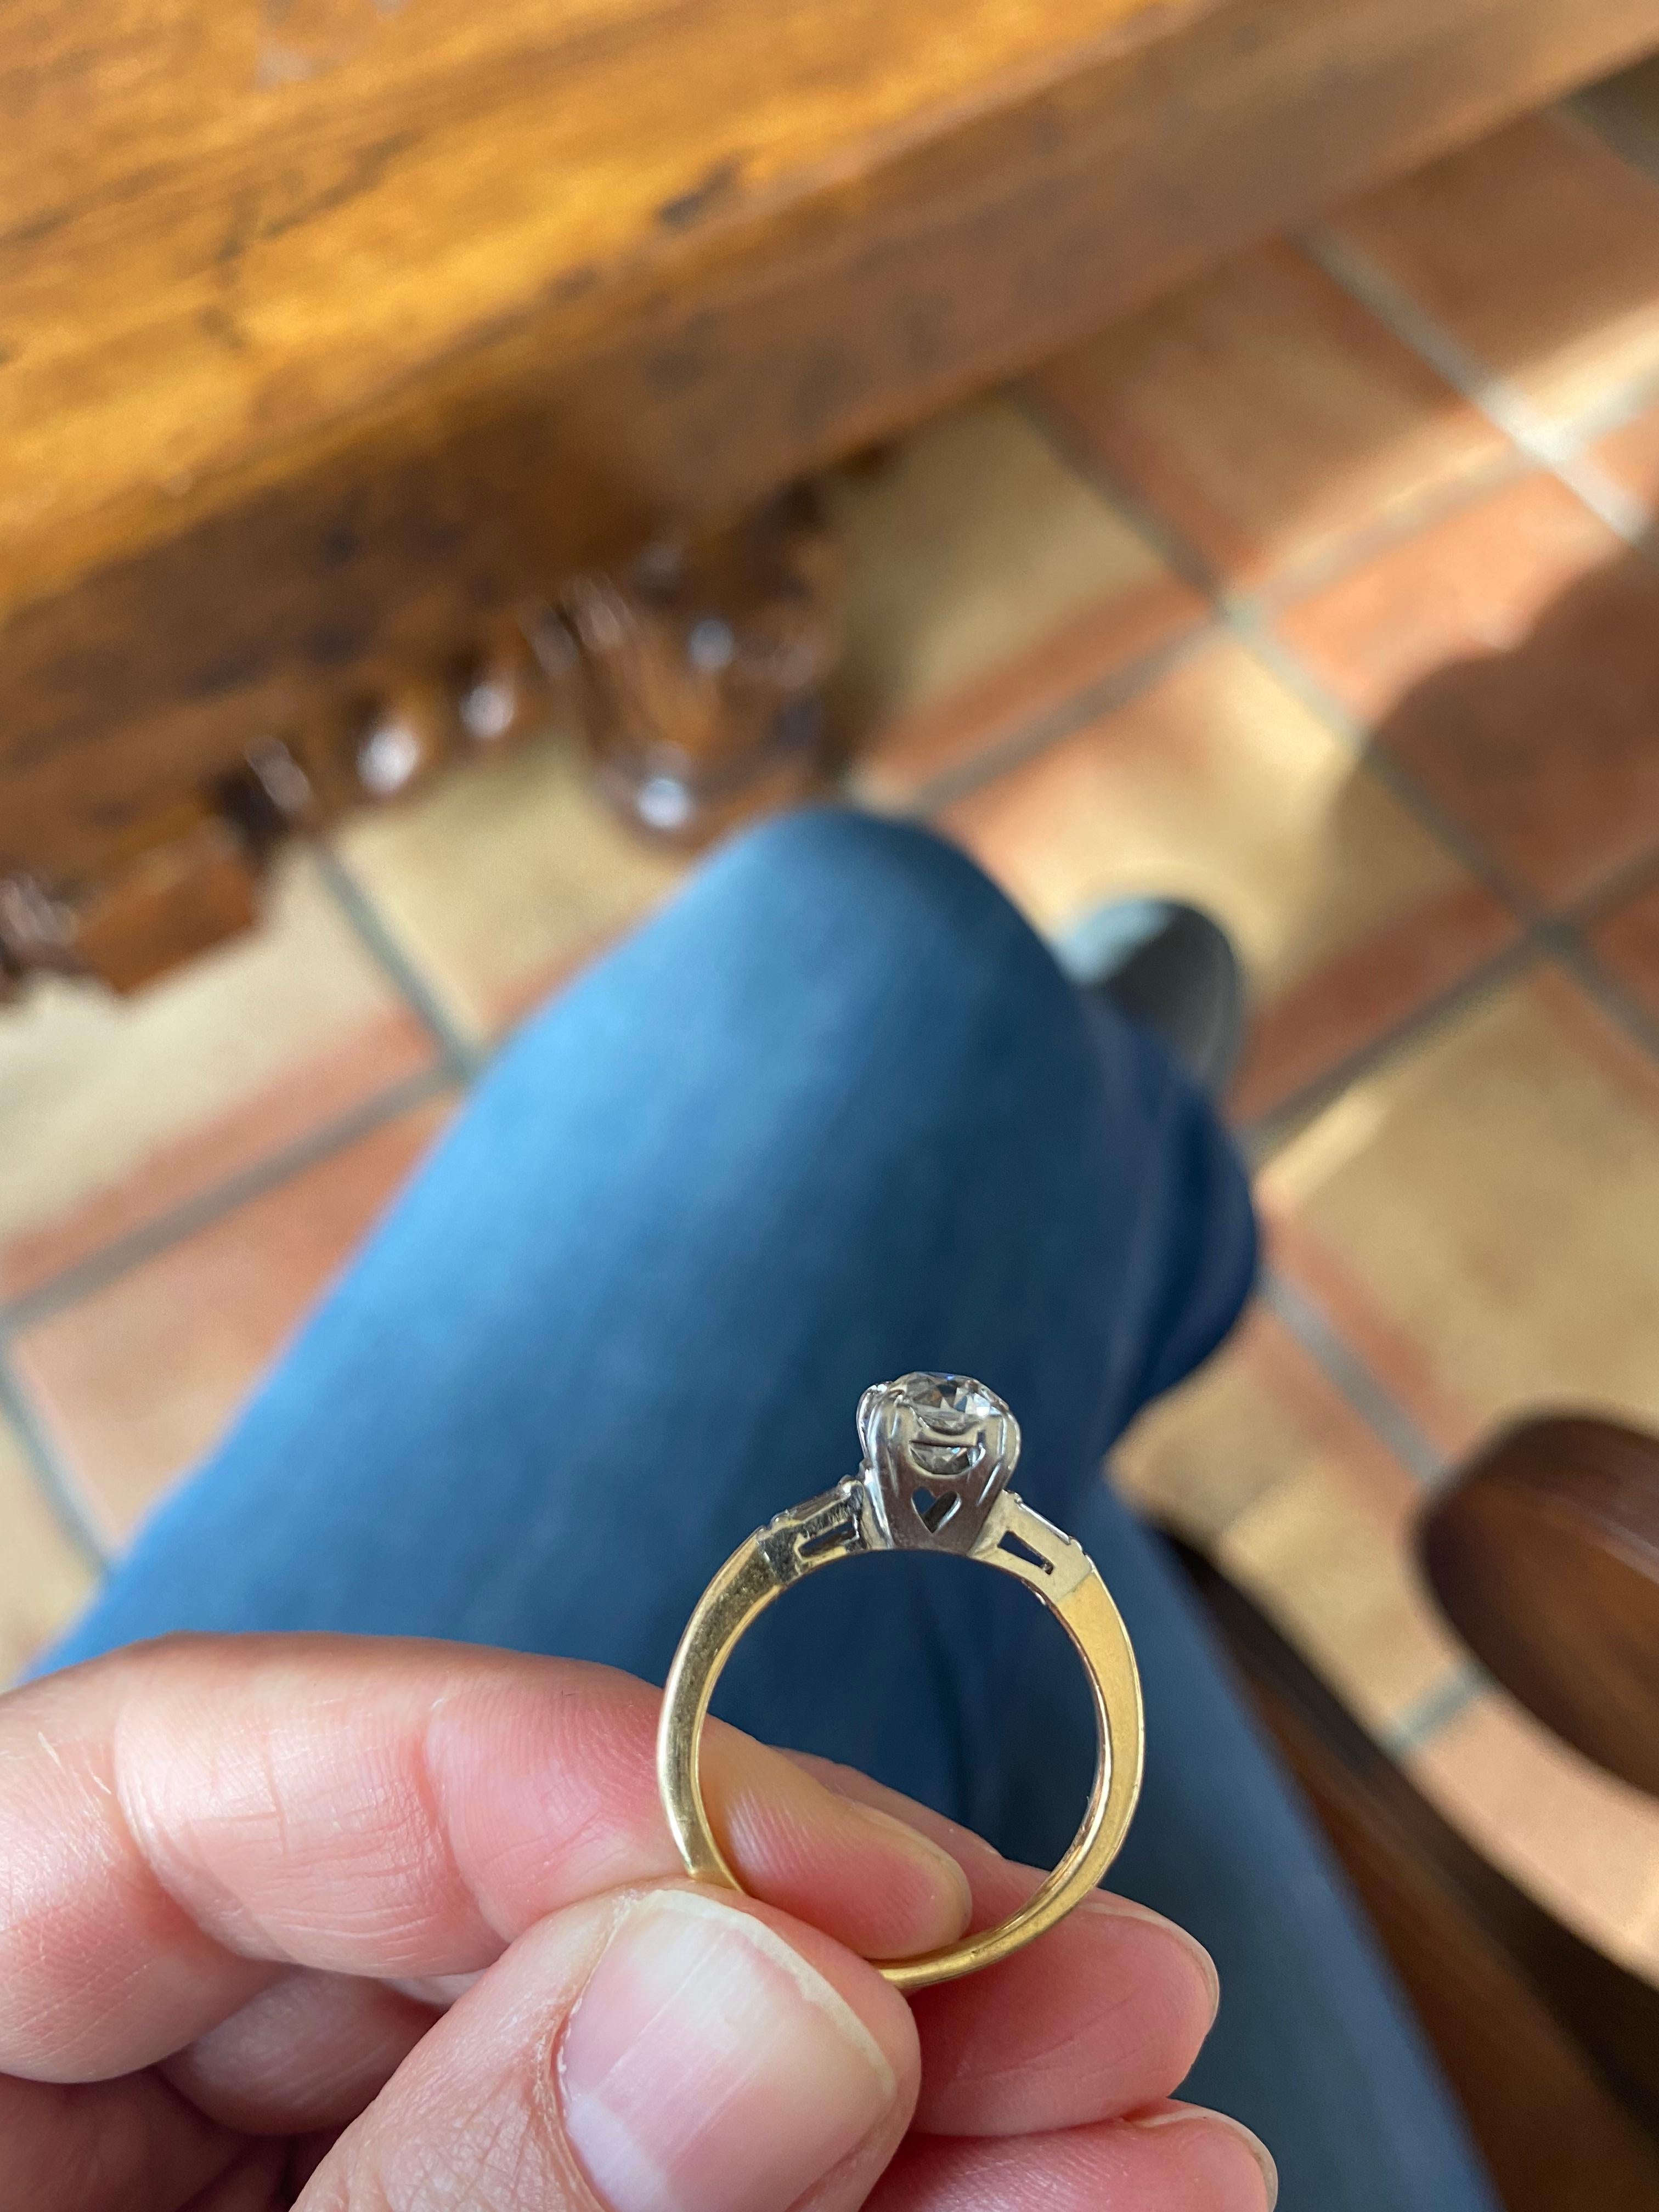 Retro Era Two Tone Diamond Engagement Ring For Sale 1